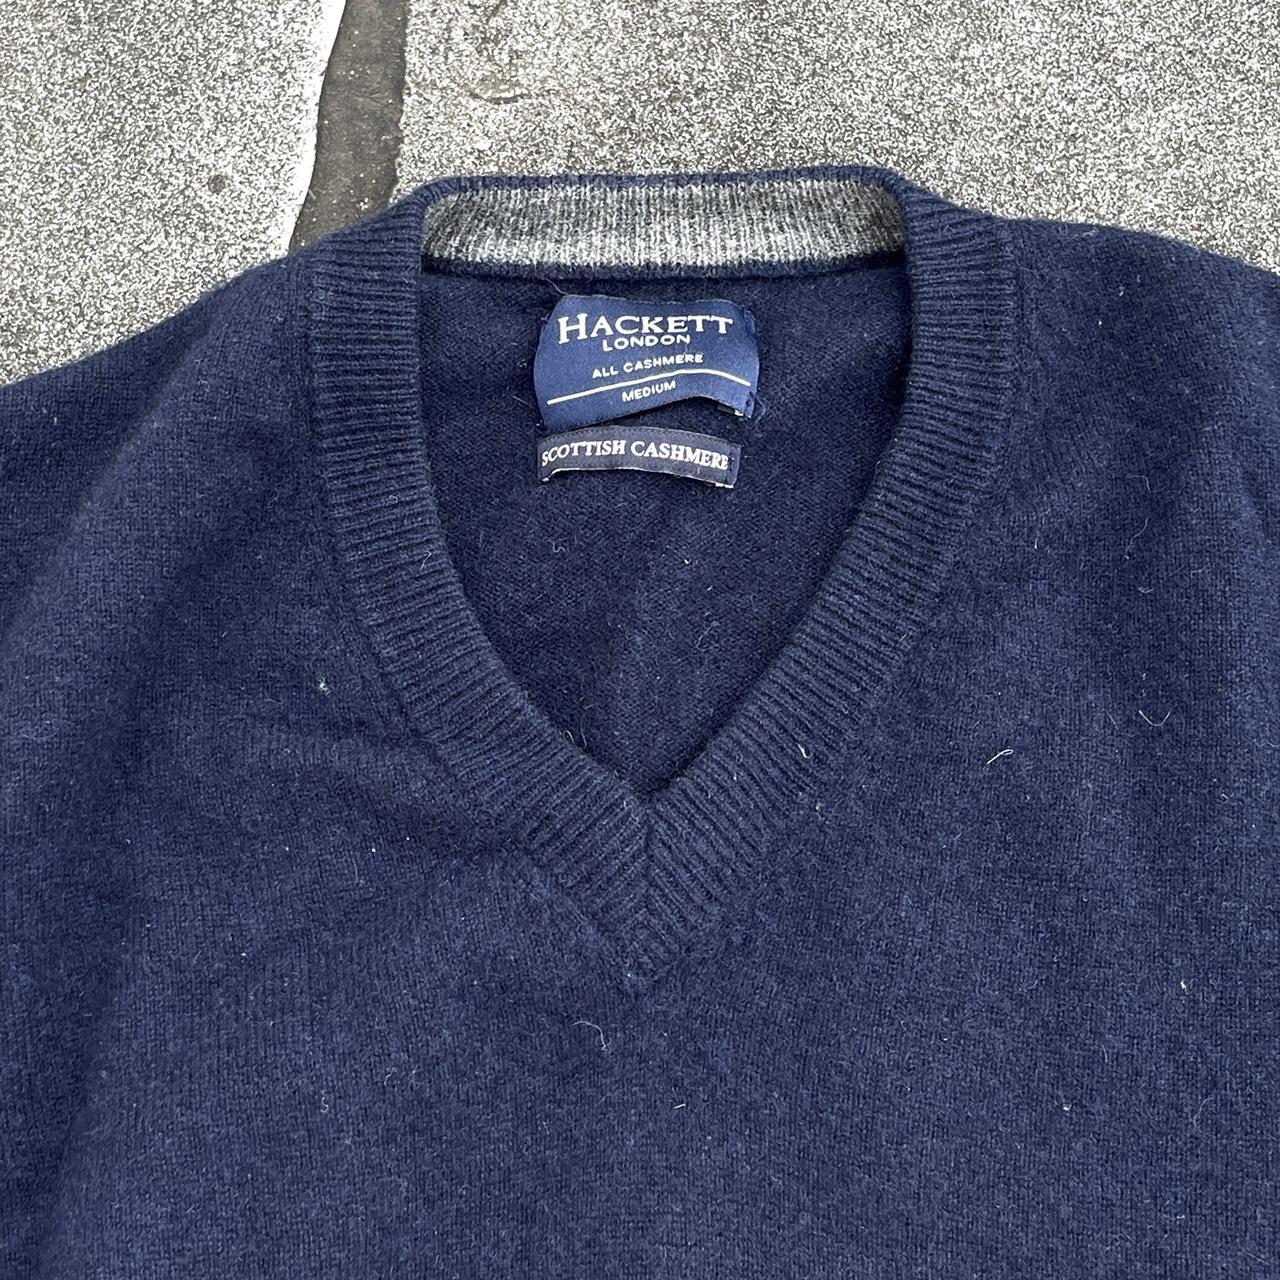 Product Image 2 - V-neck cashmere sweater, mens size